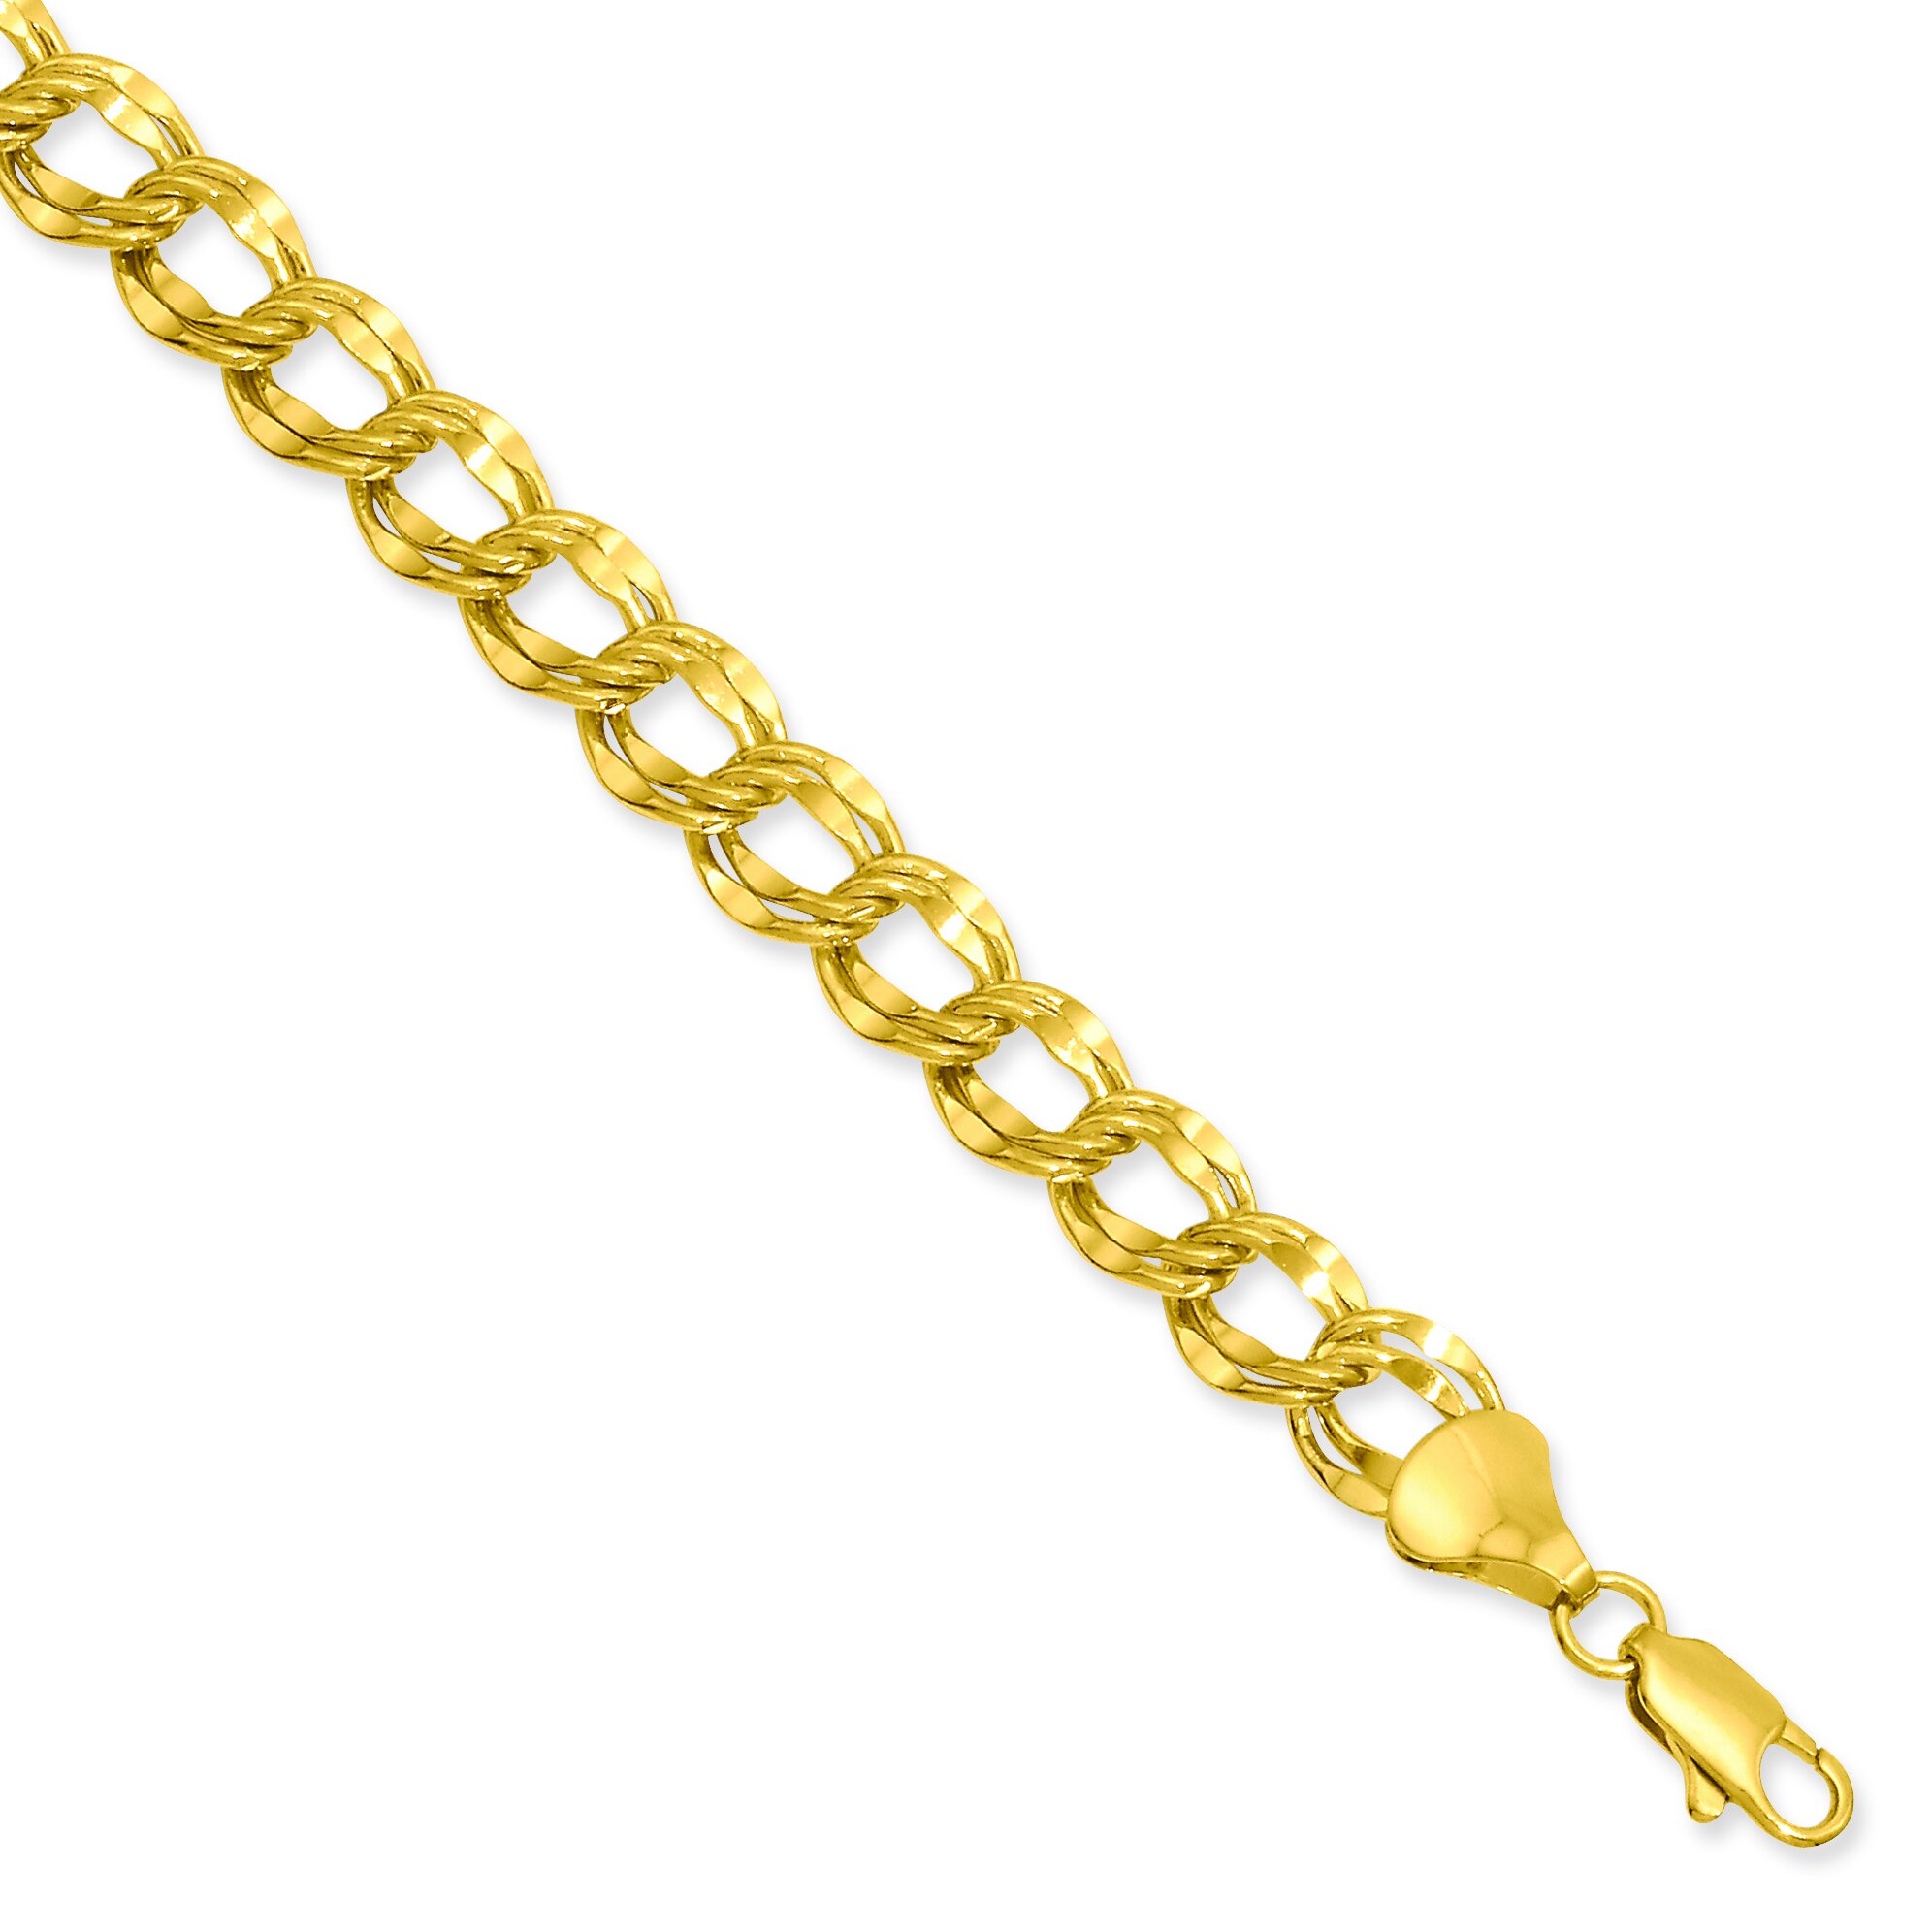 Findingking Gold Plated Double Link Bracelet 7.25"